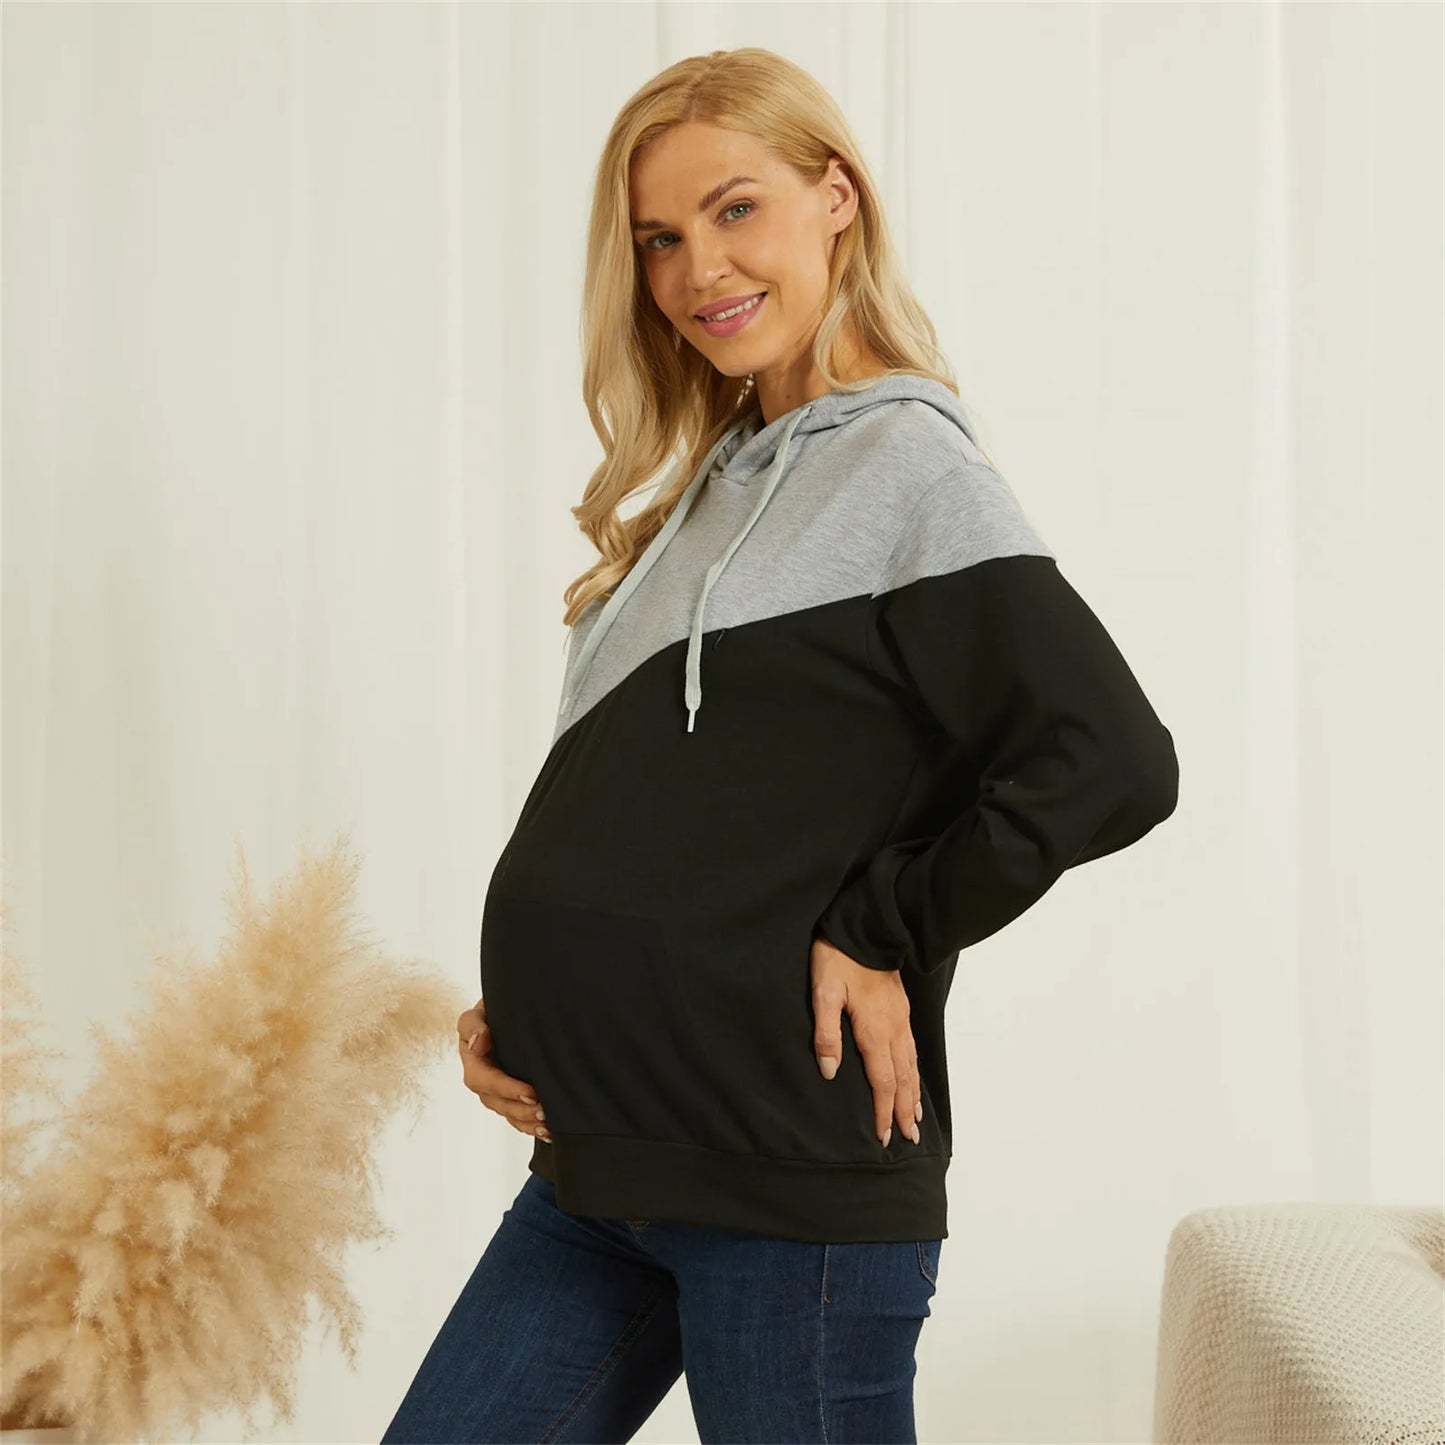 PatPat Supplies for Pregnant Women Pregnancy Maternity Clothes Nursing Warm Long-sleeve Drawstring Sweatshirt